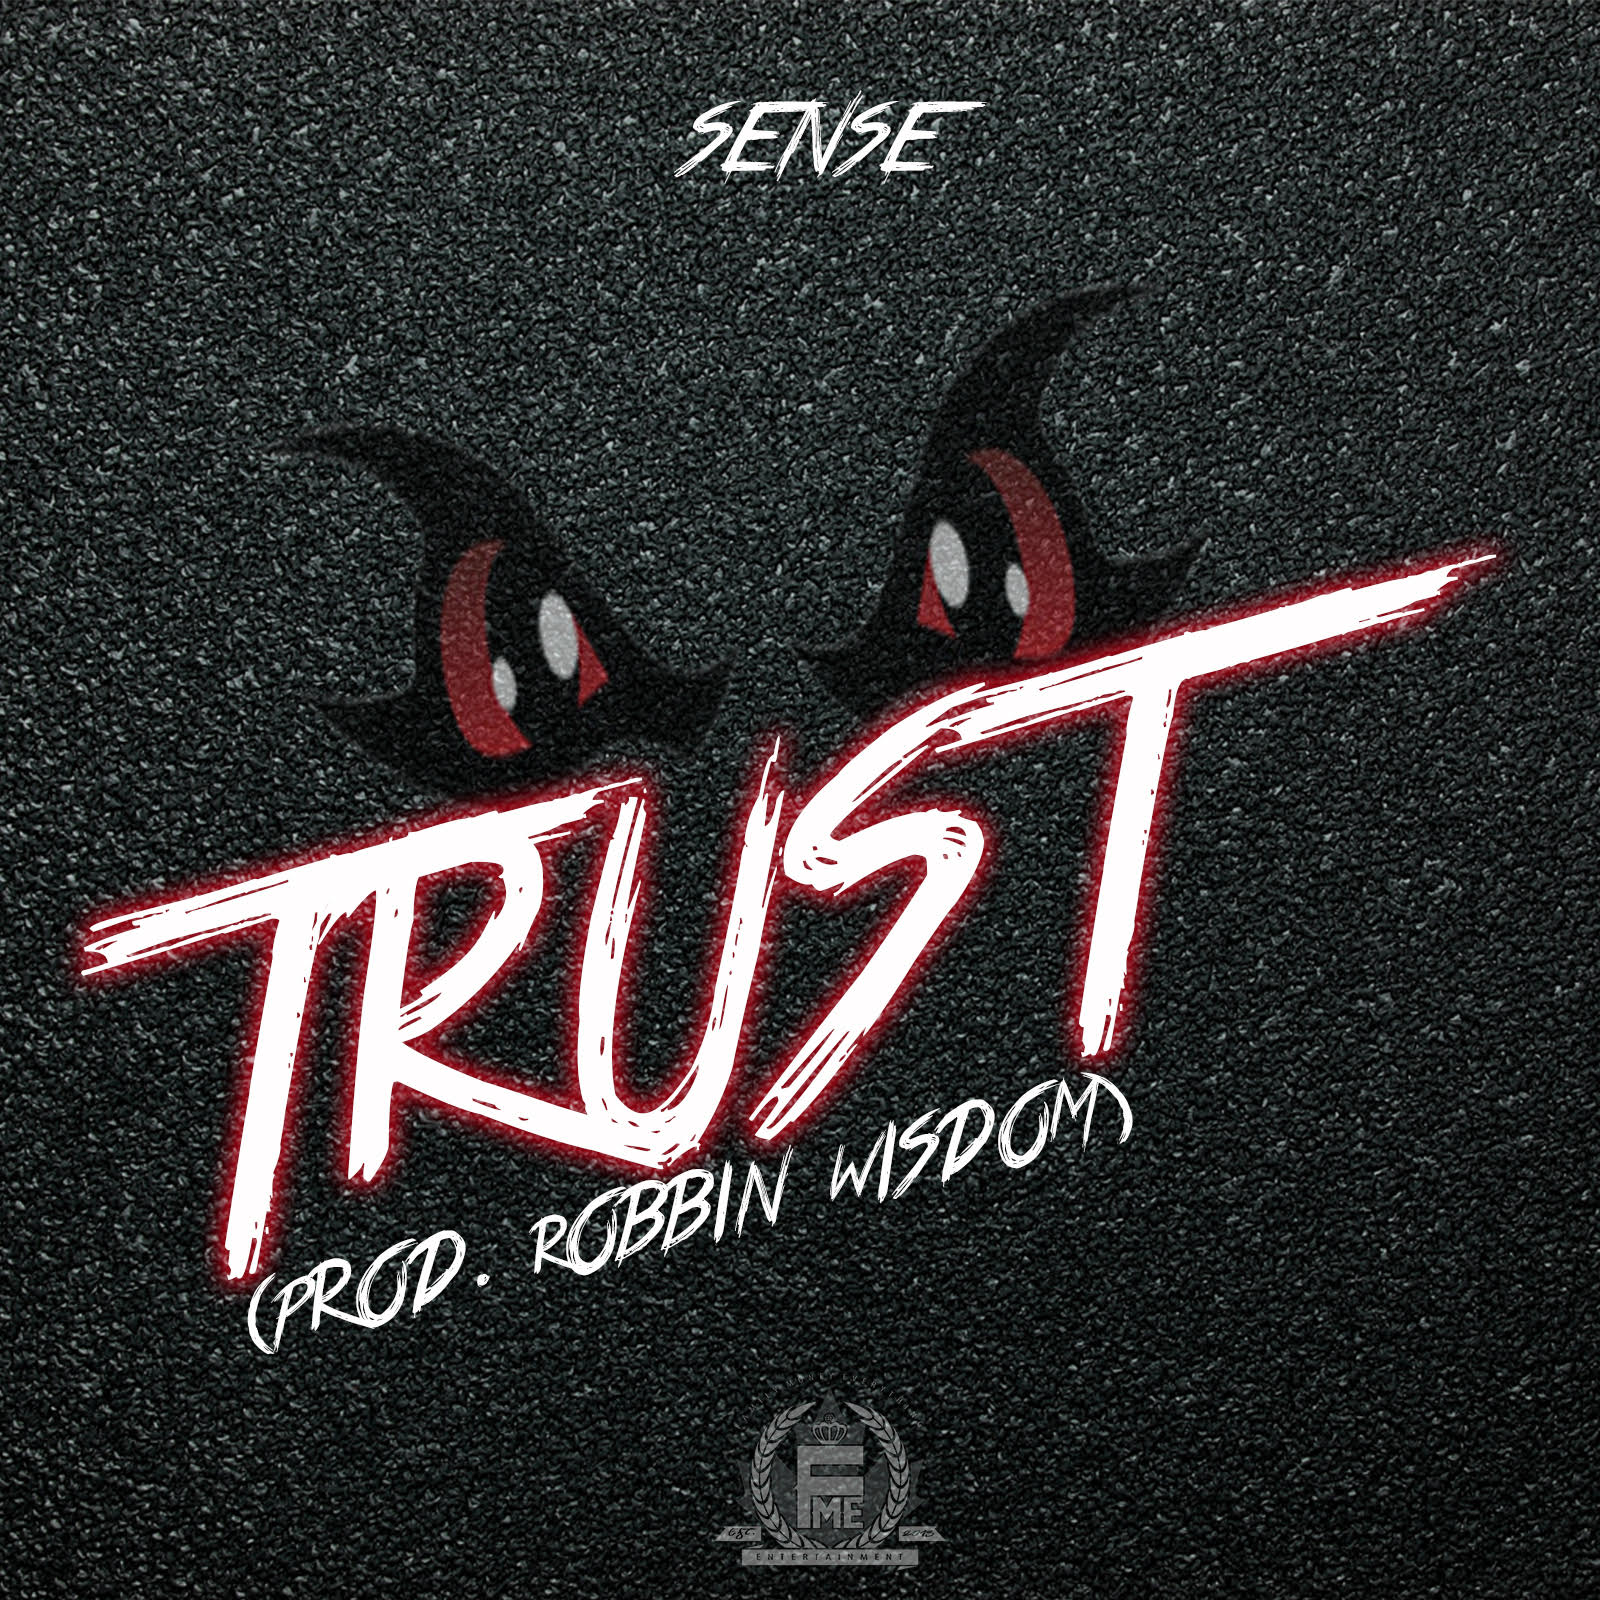 New Music:  Sense “Trust” (Prod. Robbin Wisdom)